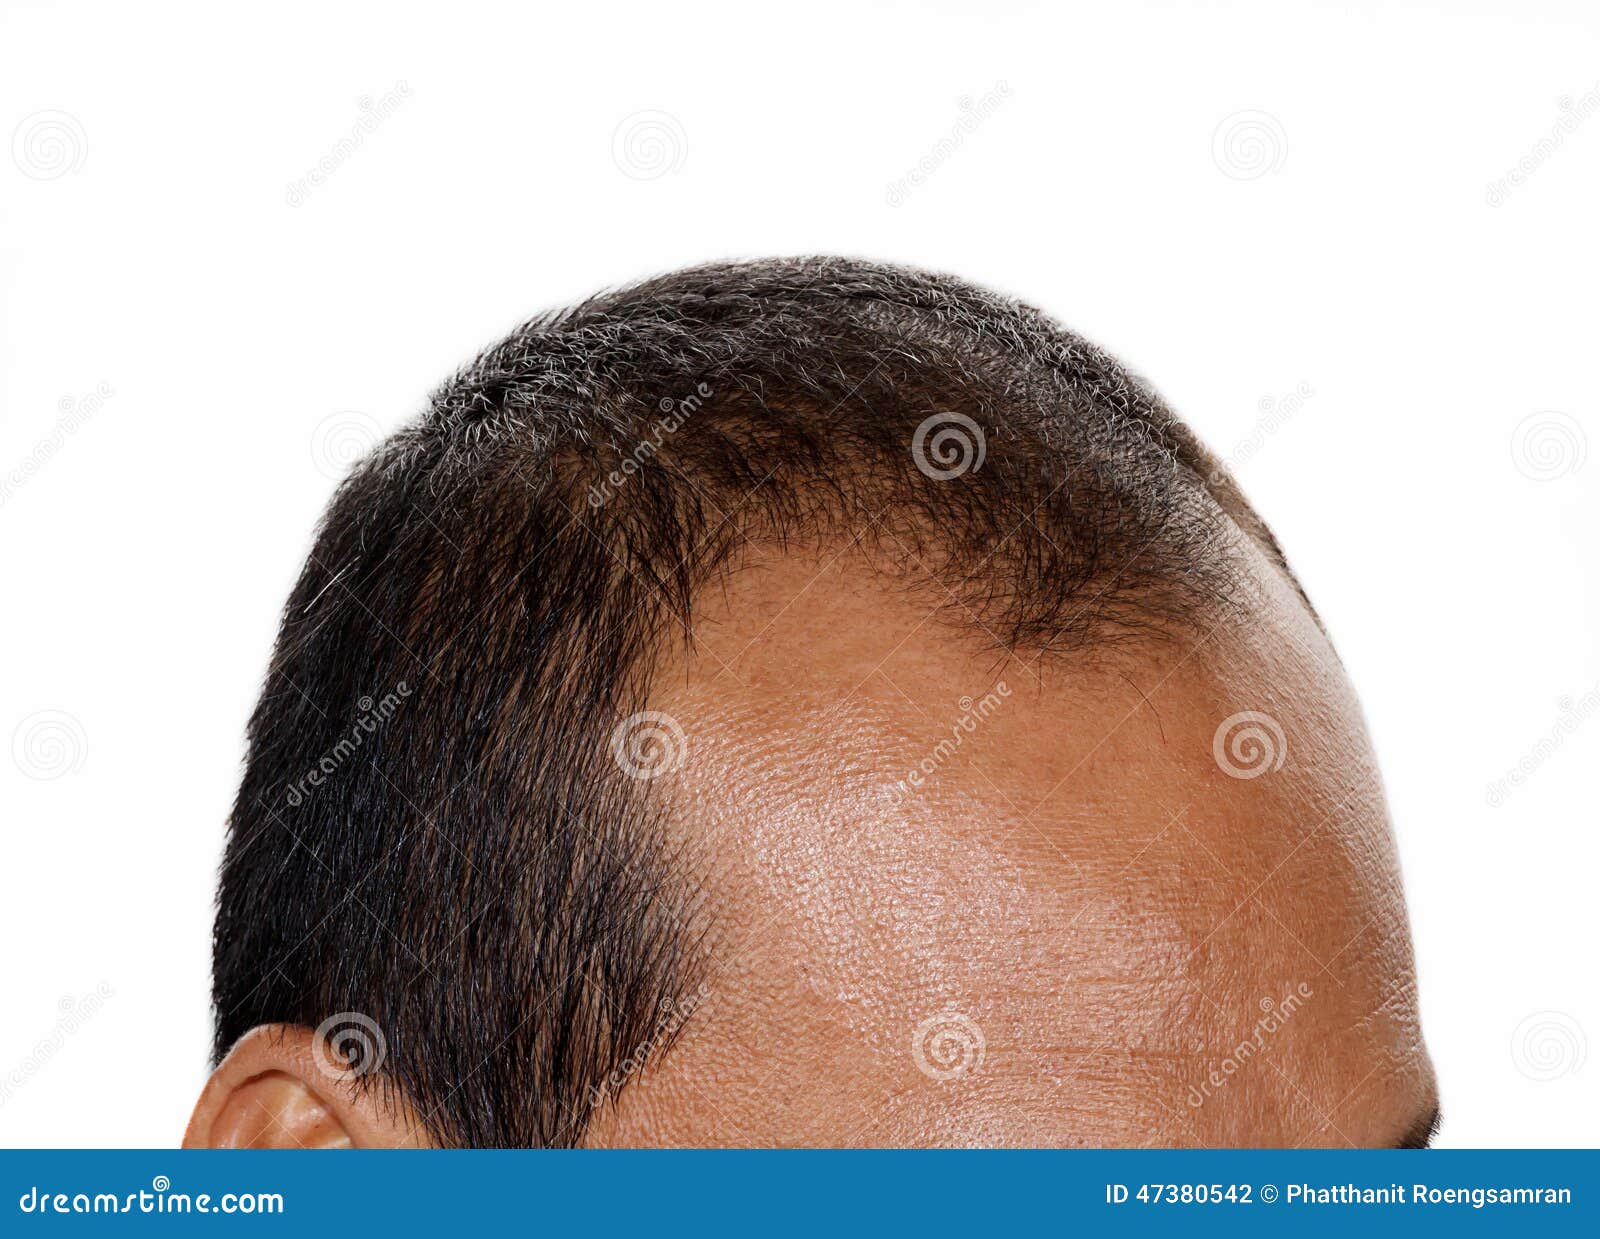 Why Do Men Go Bald Male Baldness Causes Treatment Prevention